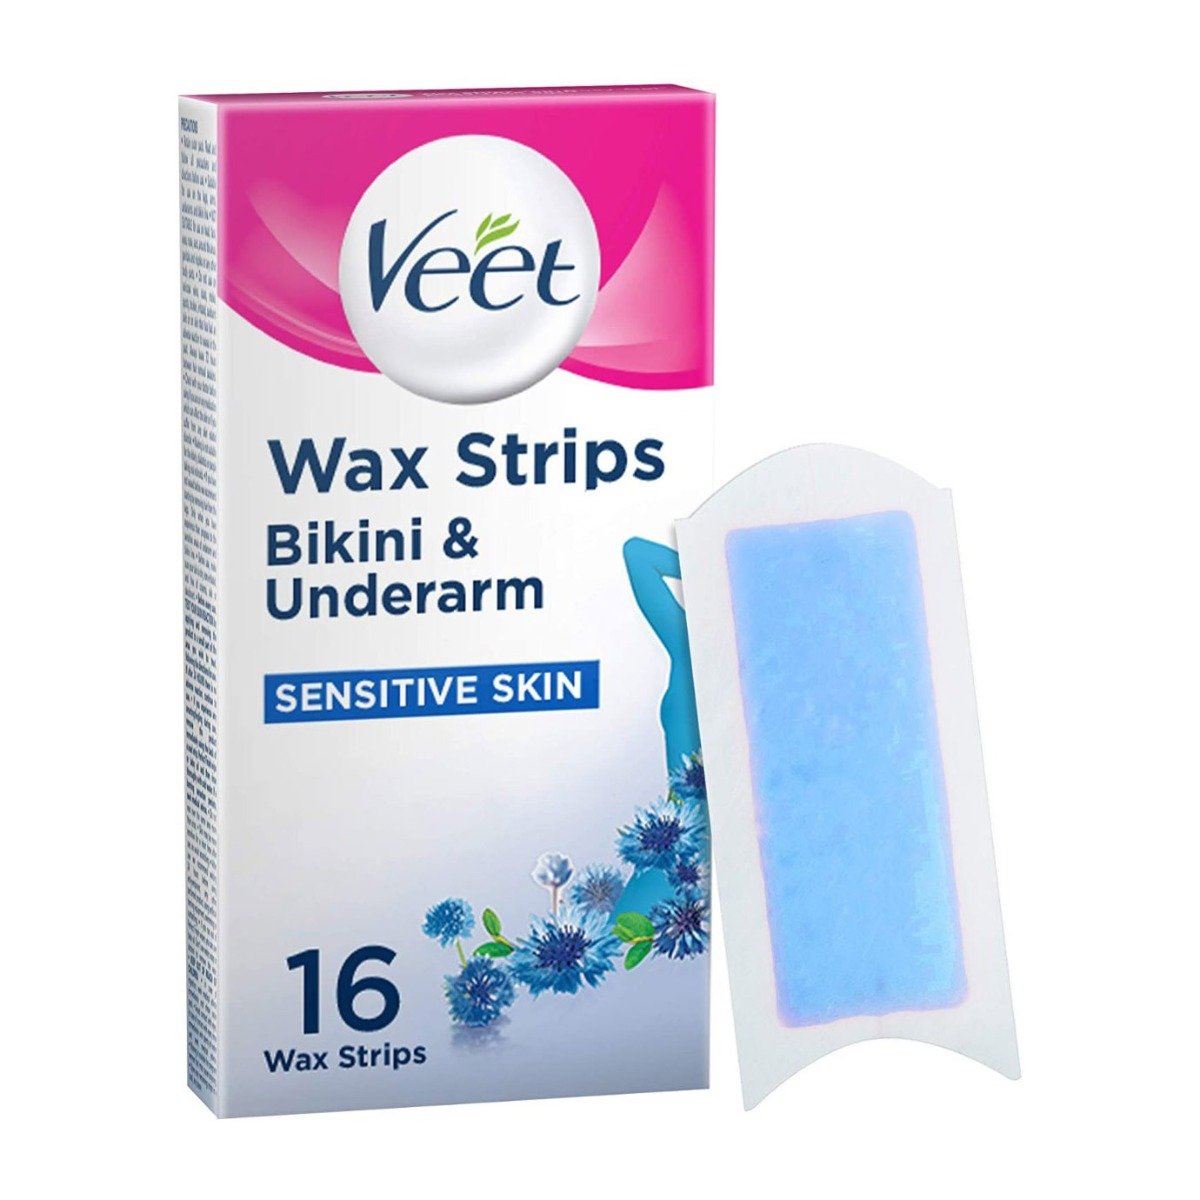 Veet Bikini & Underarm Wax Strips for Sensitive Skin - 16 Strips - Bloom Pharmacy